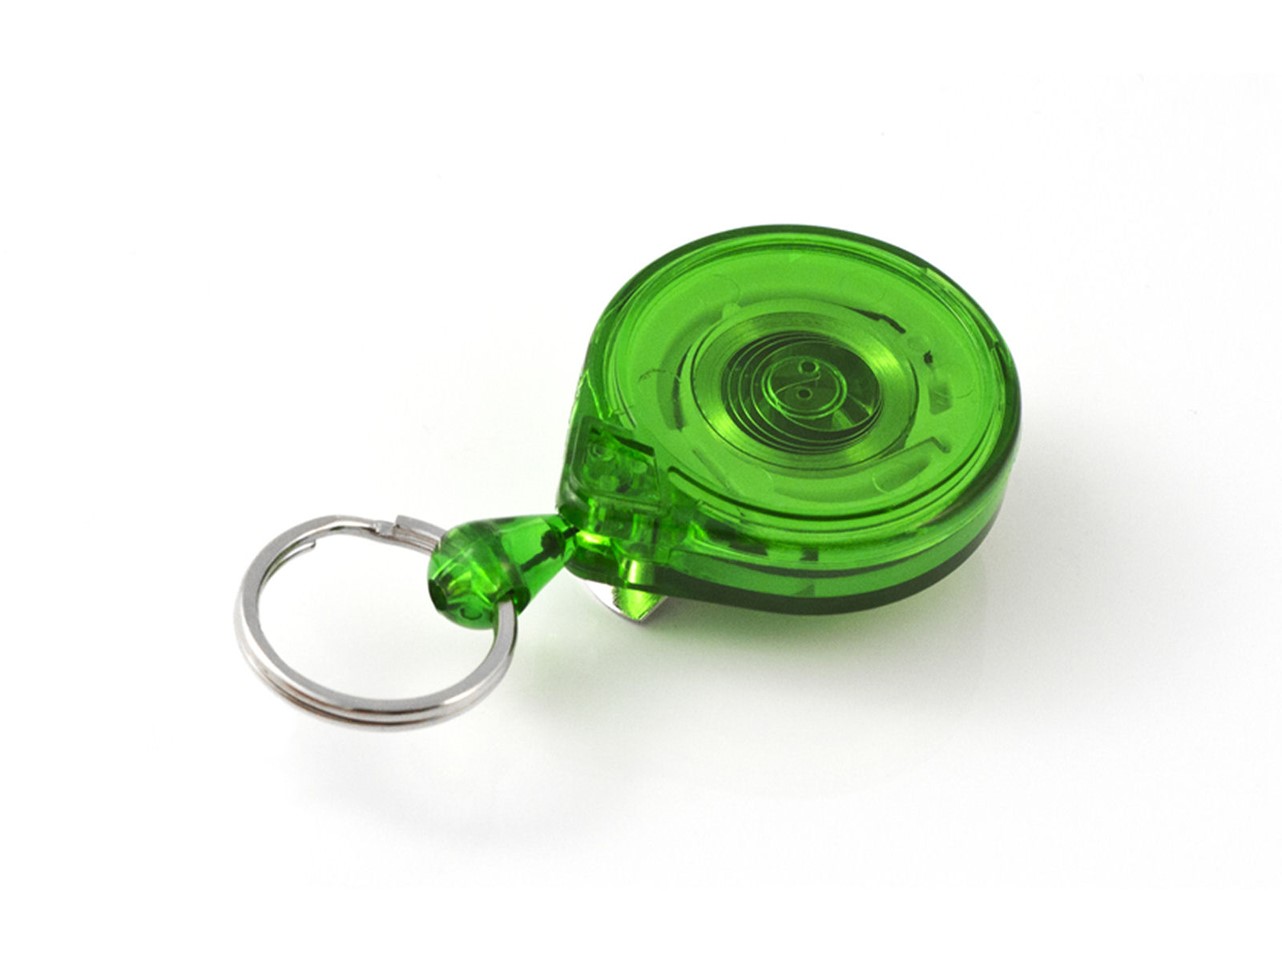 Bild von KEY-BAK Mini-Bak Grün Schlüsselrolle